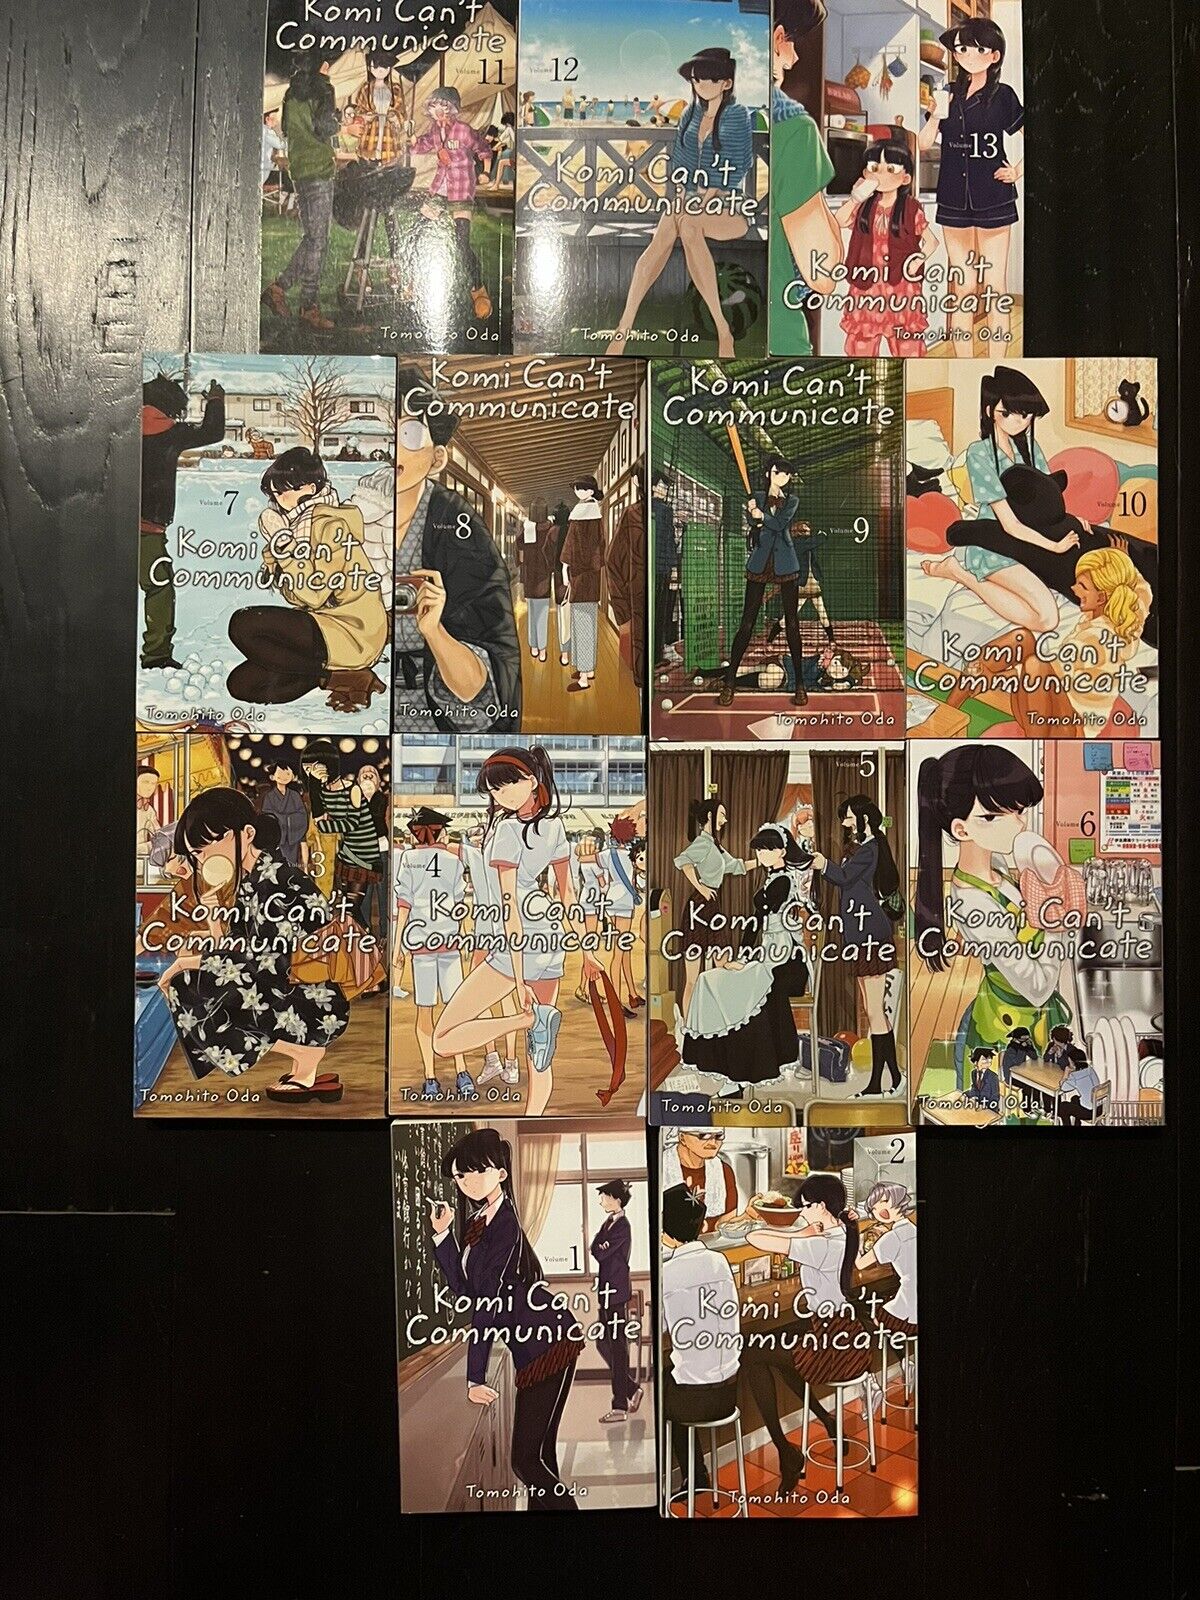 Komi Can't Communicate Manga Lot Vol 1-13 English Viz Media Shonen Sunday Ed.